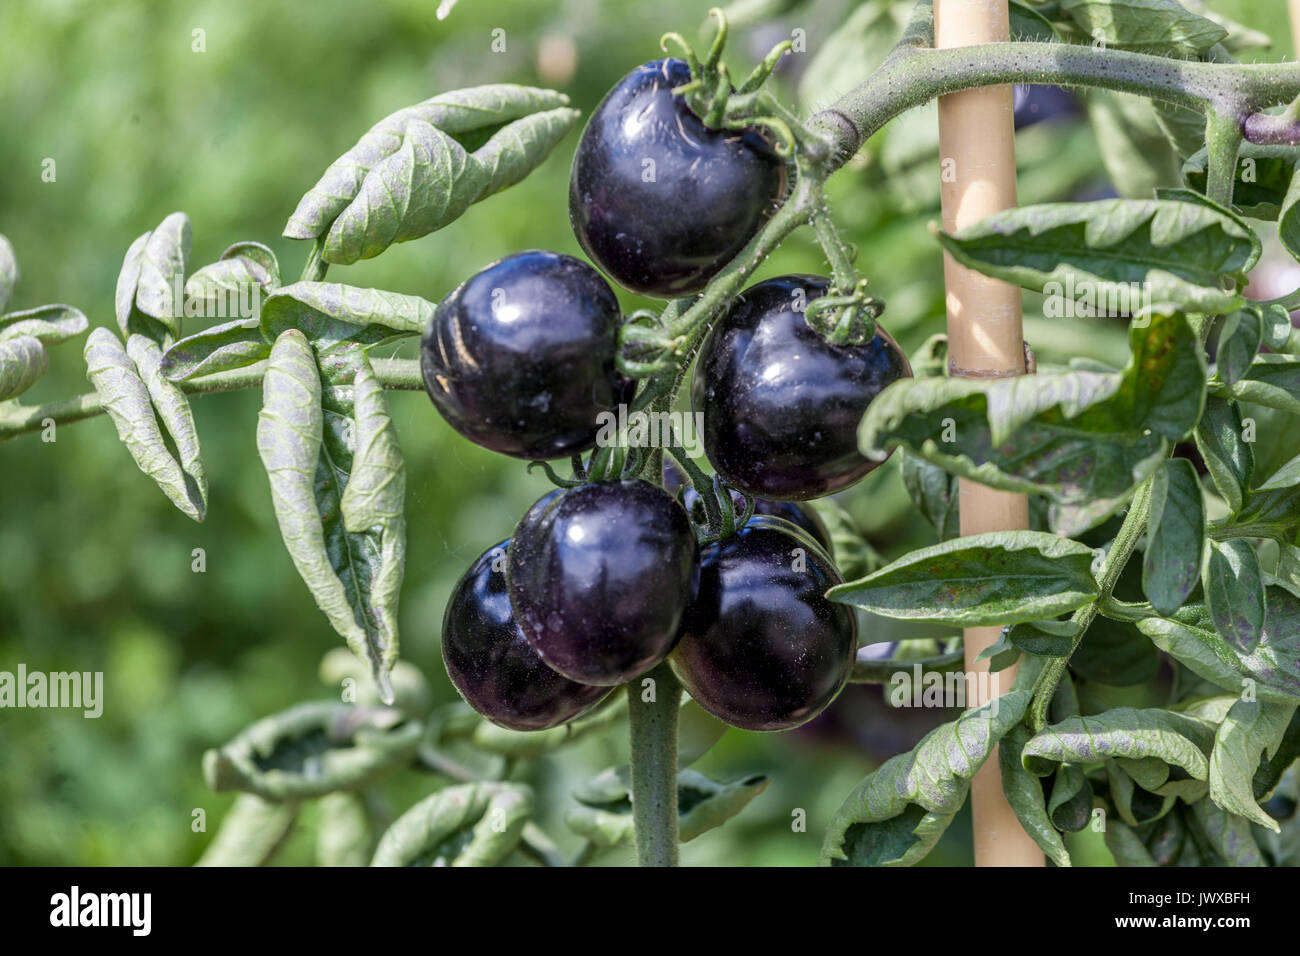 Black tomatoes, Tomato 'Indigo Rose' on the vine Solanum lycopersicum plant Stock Photo